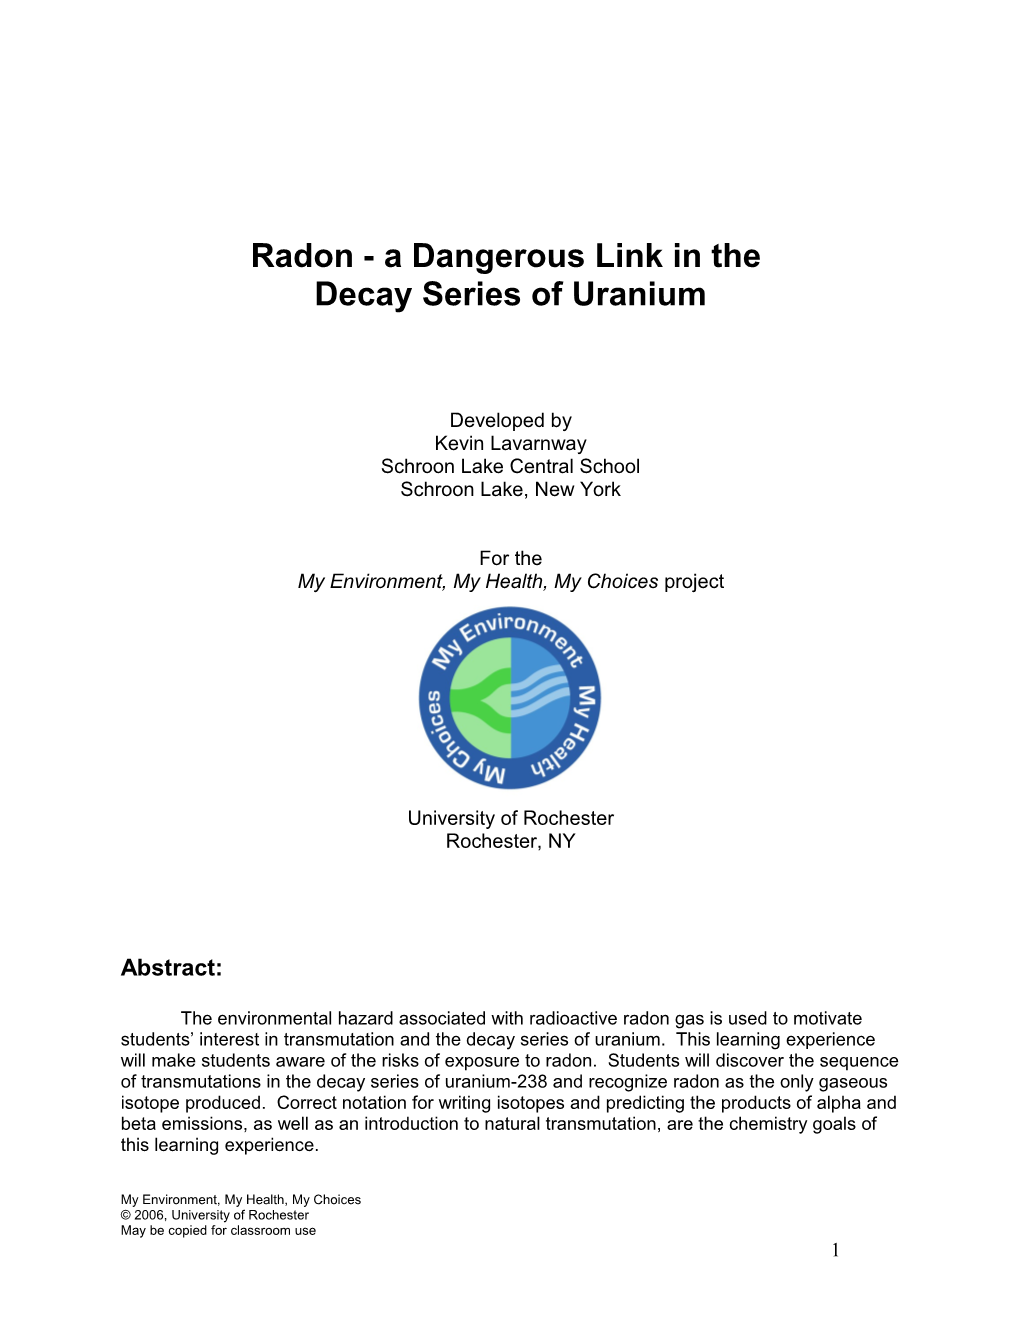 Radon - a Dangerous Link in The